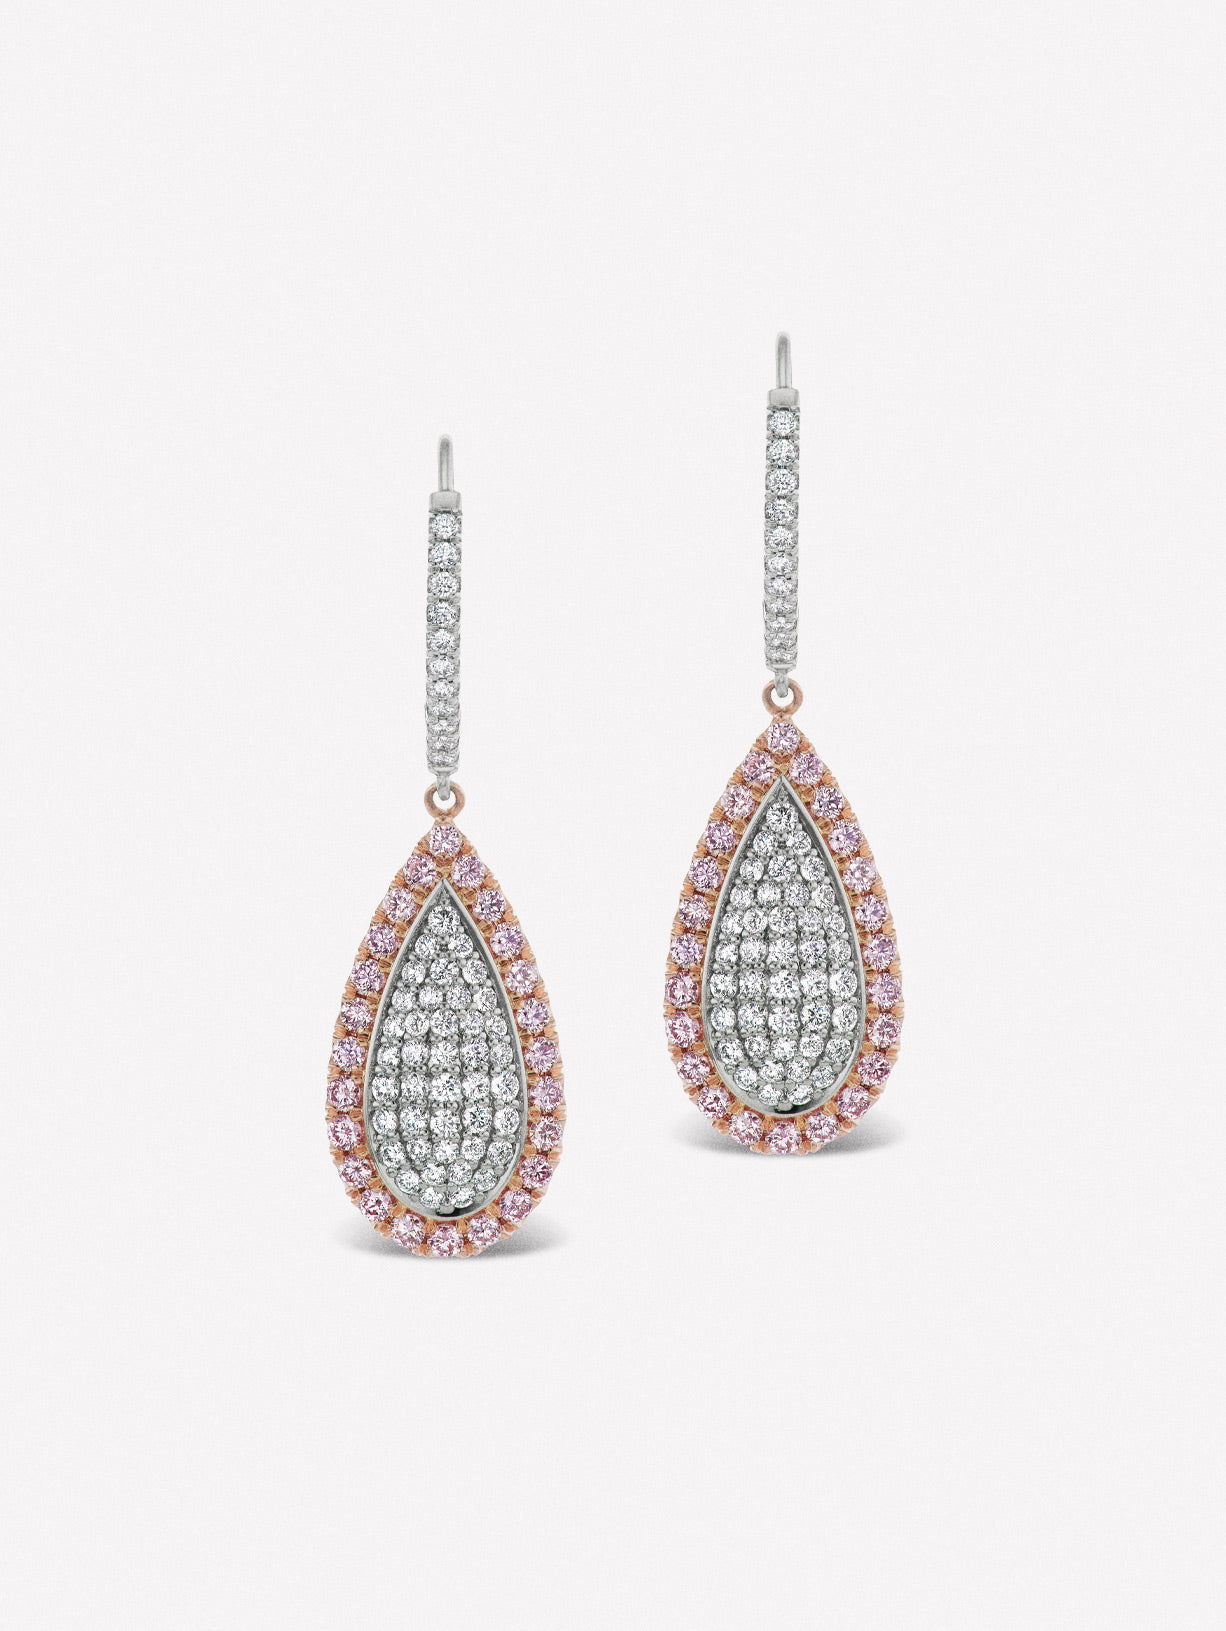 Argyle Pink™ Diamond Pear Shape Drop Earrings - Pink Diamonds, J FINE - J Fine, earrings - Pink Diamond Jewelry, argyle-pink™-diamond-pear-shape-drop-earrings-by-j-f-i-n-e - Argyle Pink D